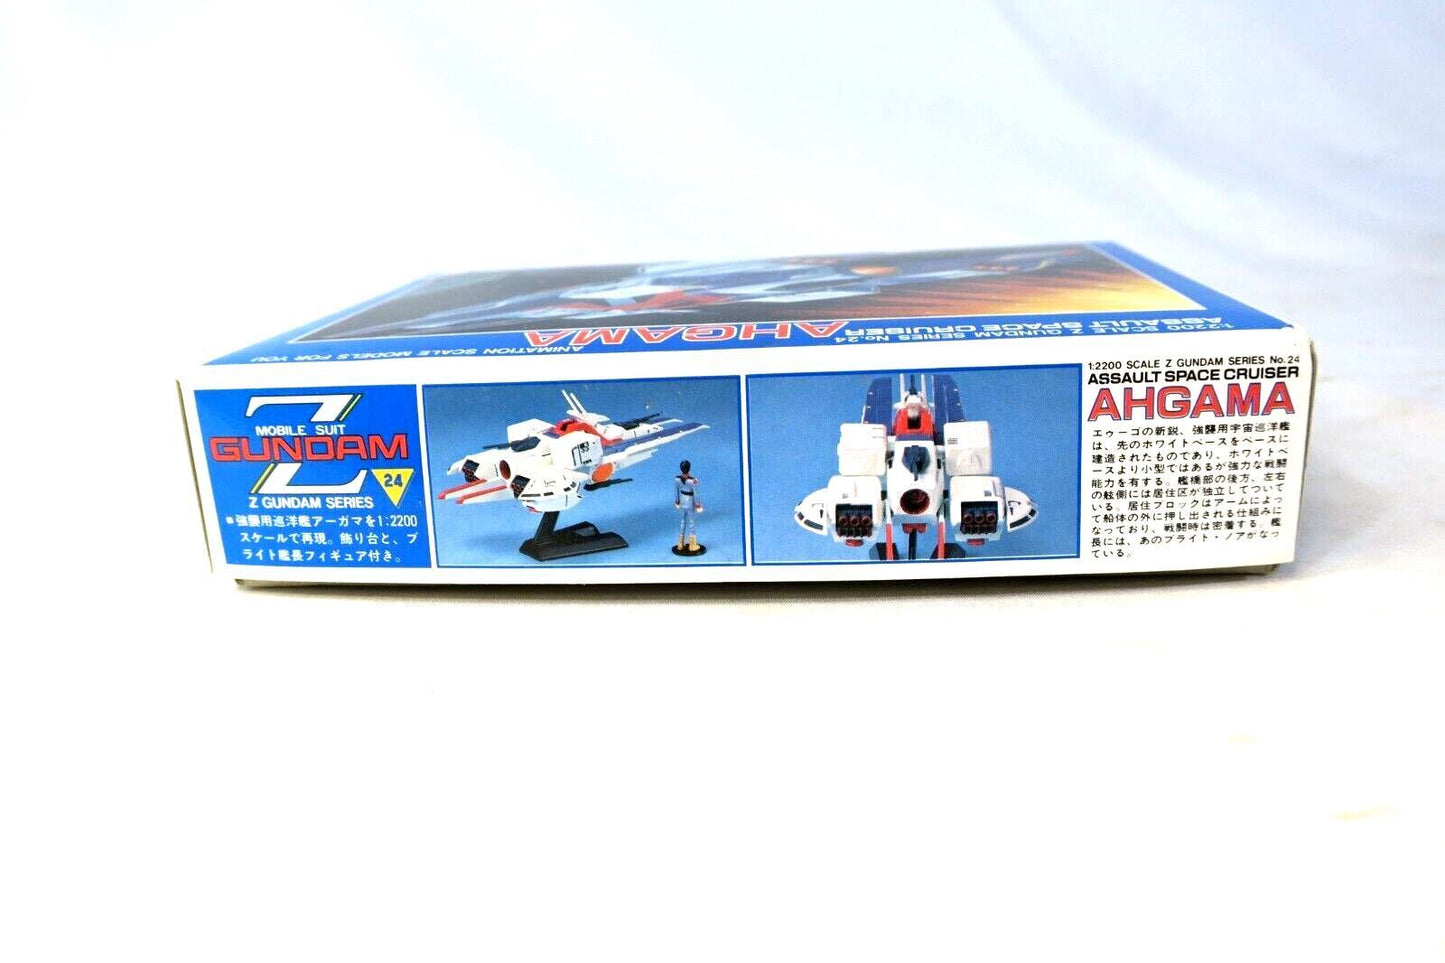 Bandai Z Gundam Series No. 24 Assault Space Cruiser Ahgama 1/2200 Model Kit A13